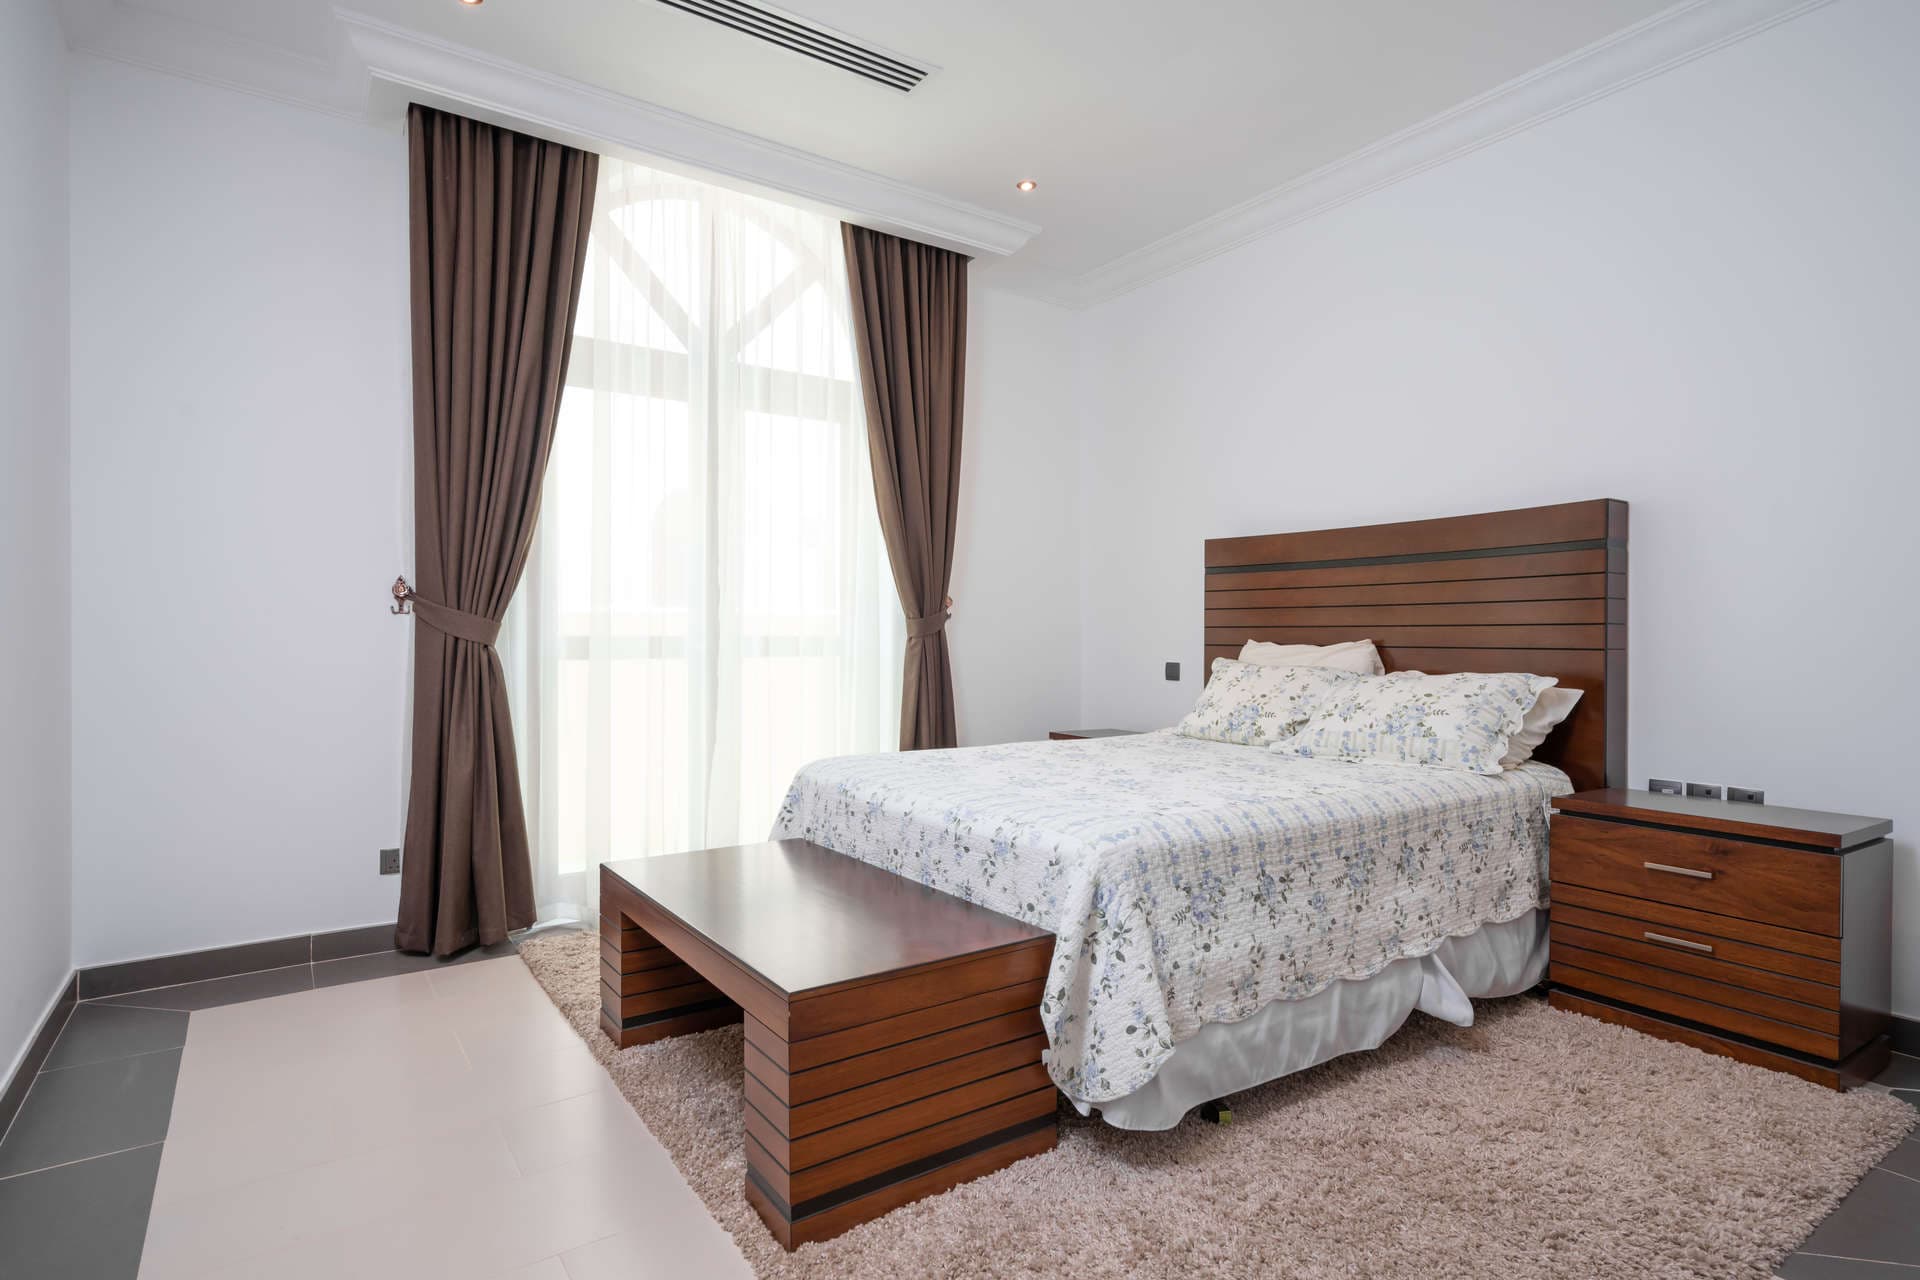 5 Bedroom Villa For Rent Orange Lake Lp04272 29676394838e2c00.jpg